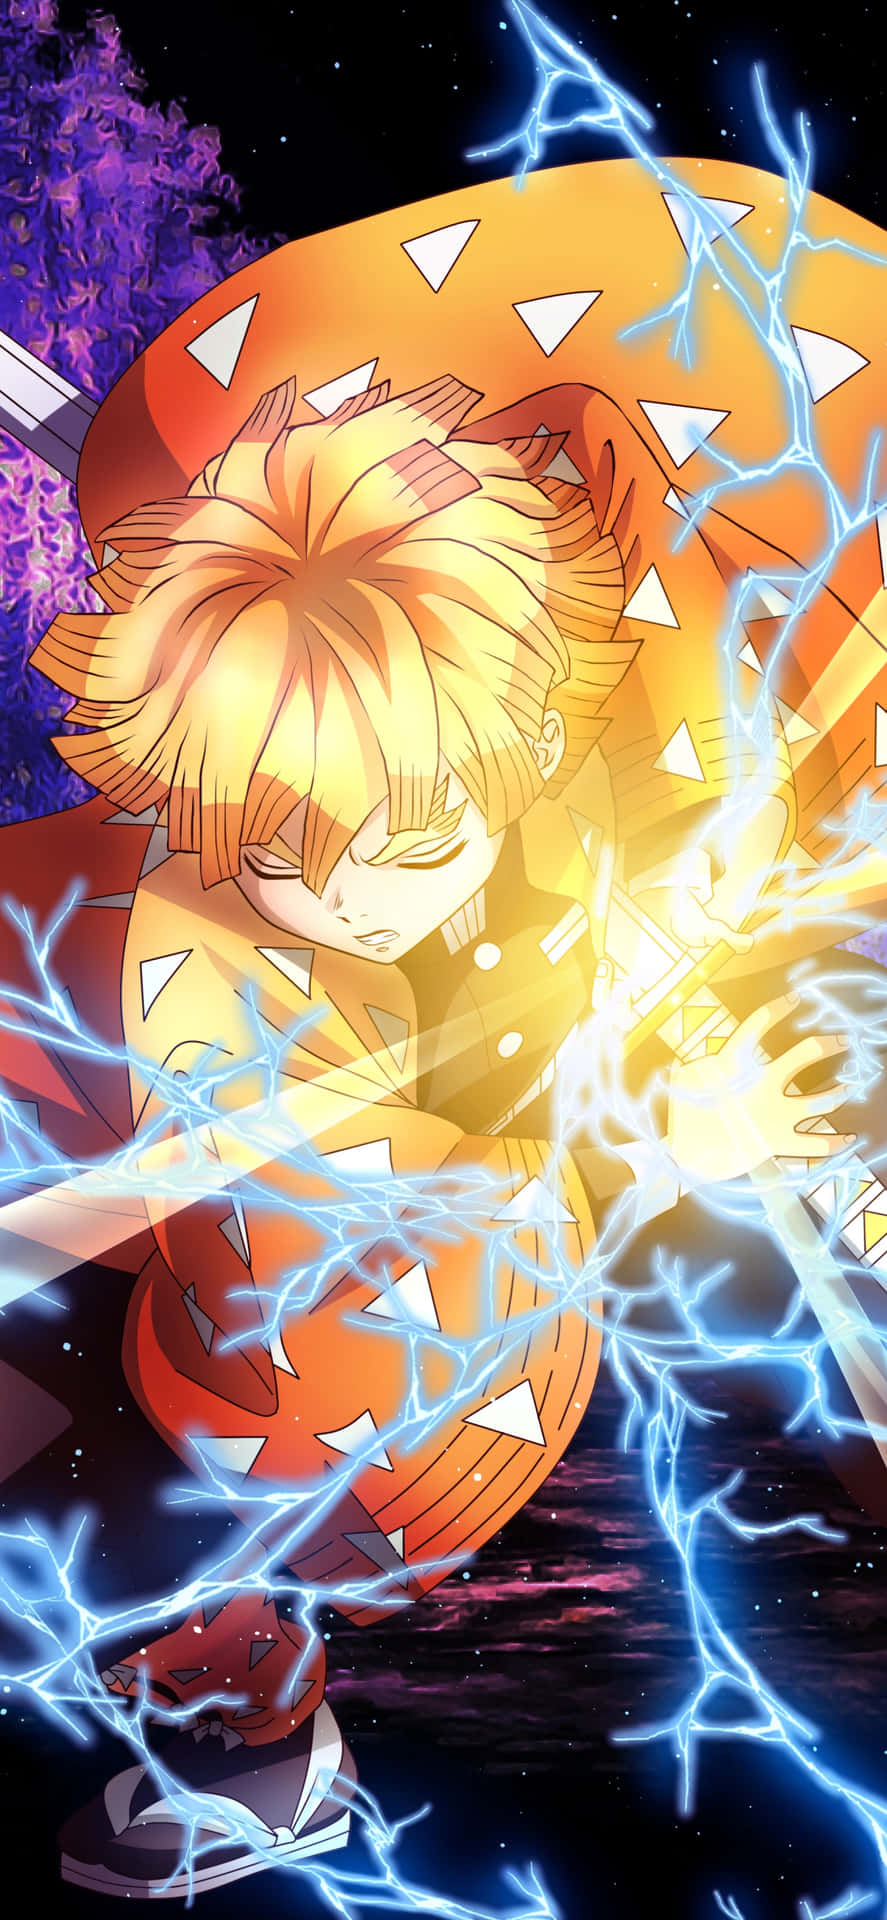 Zenitsu inspired by the power of lightning